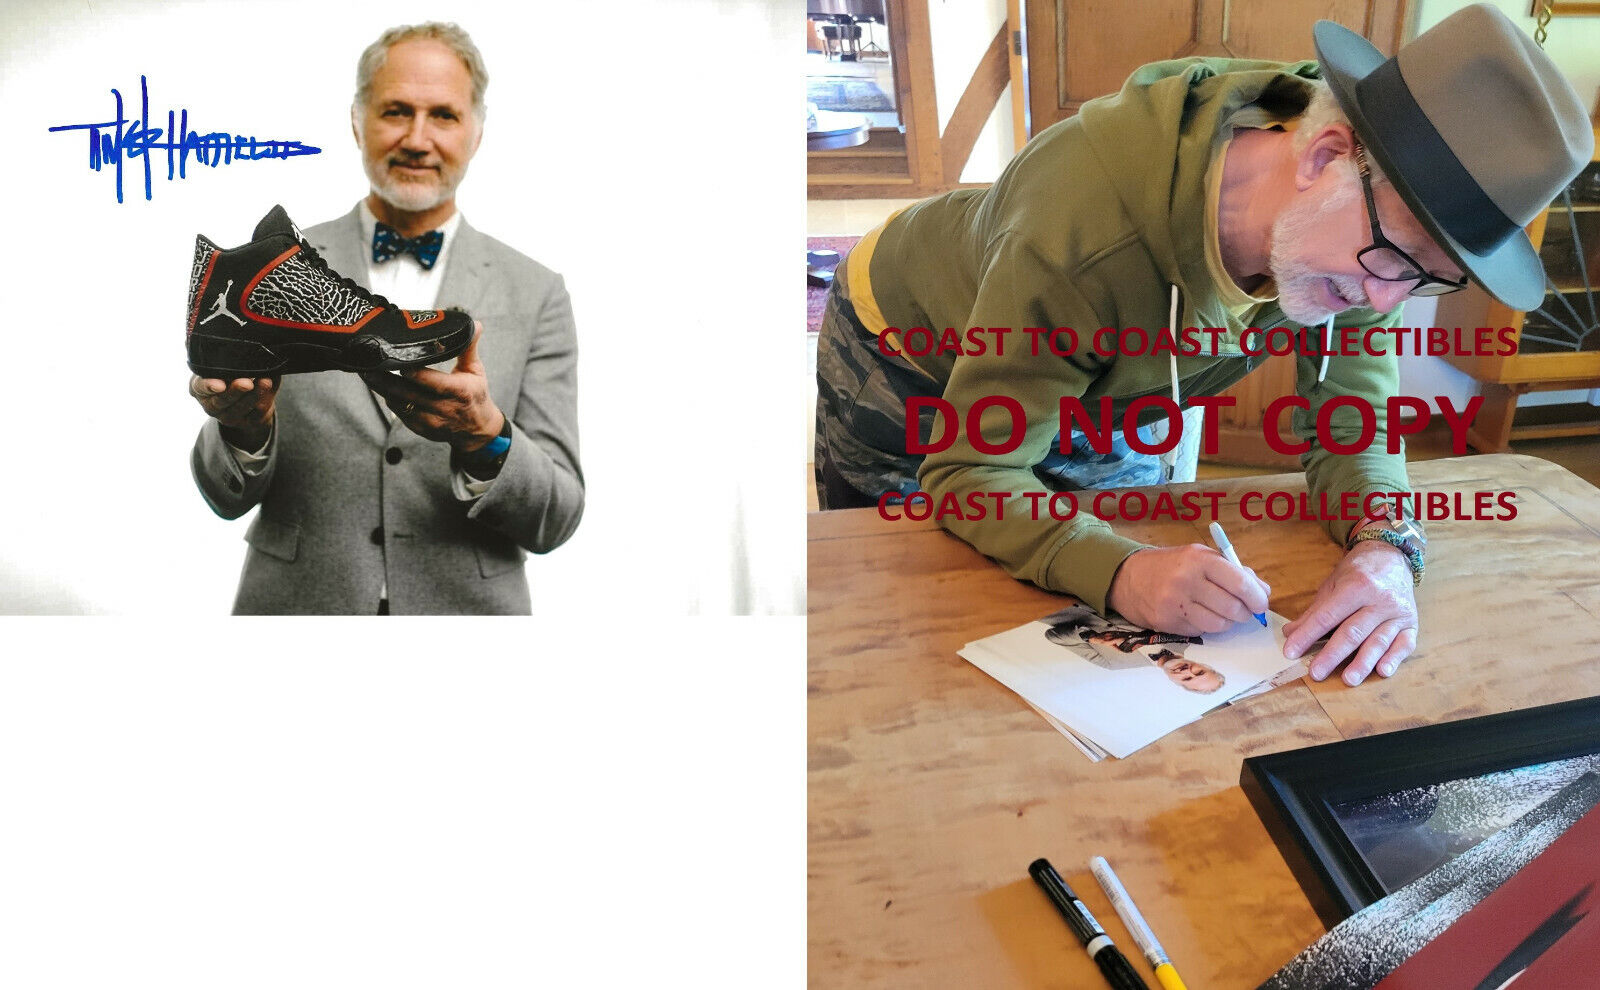 Tinker Hatfield Nike Air Jordan designer signed 8x10 photo COA exact proof